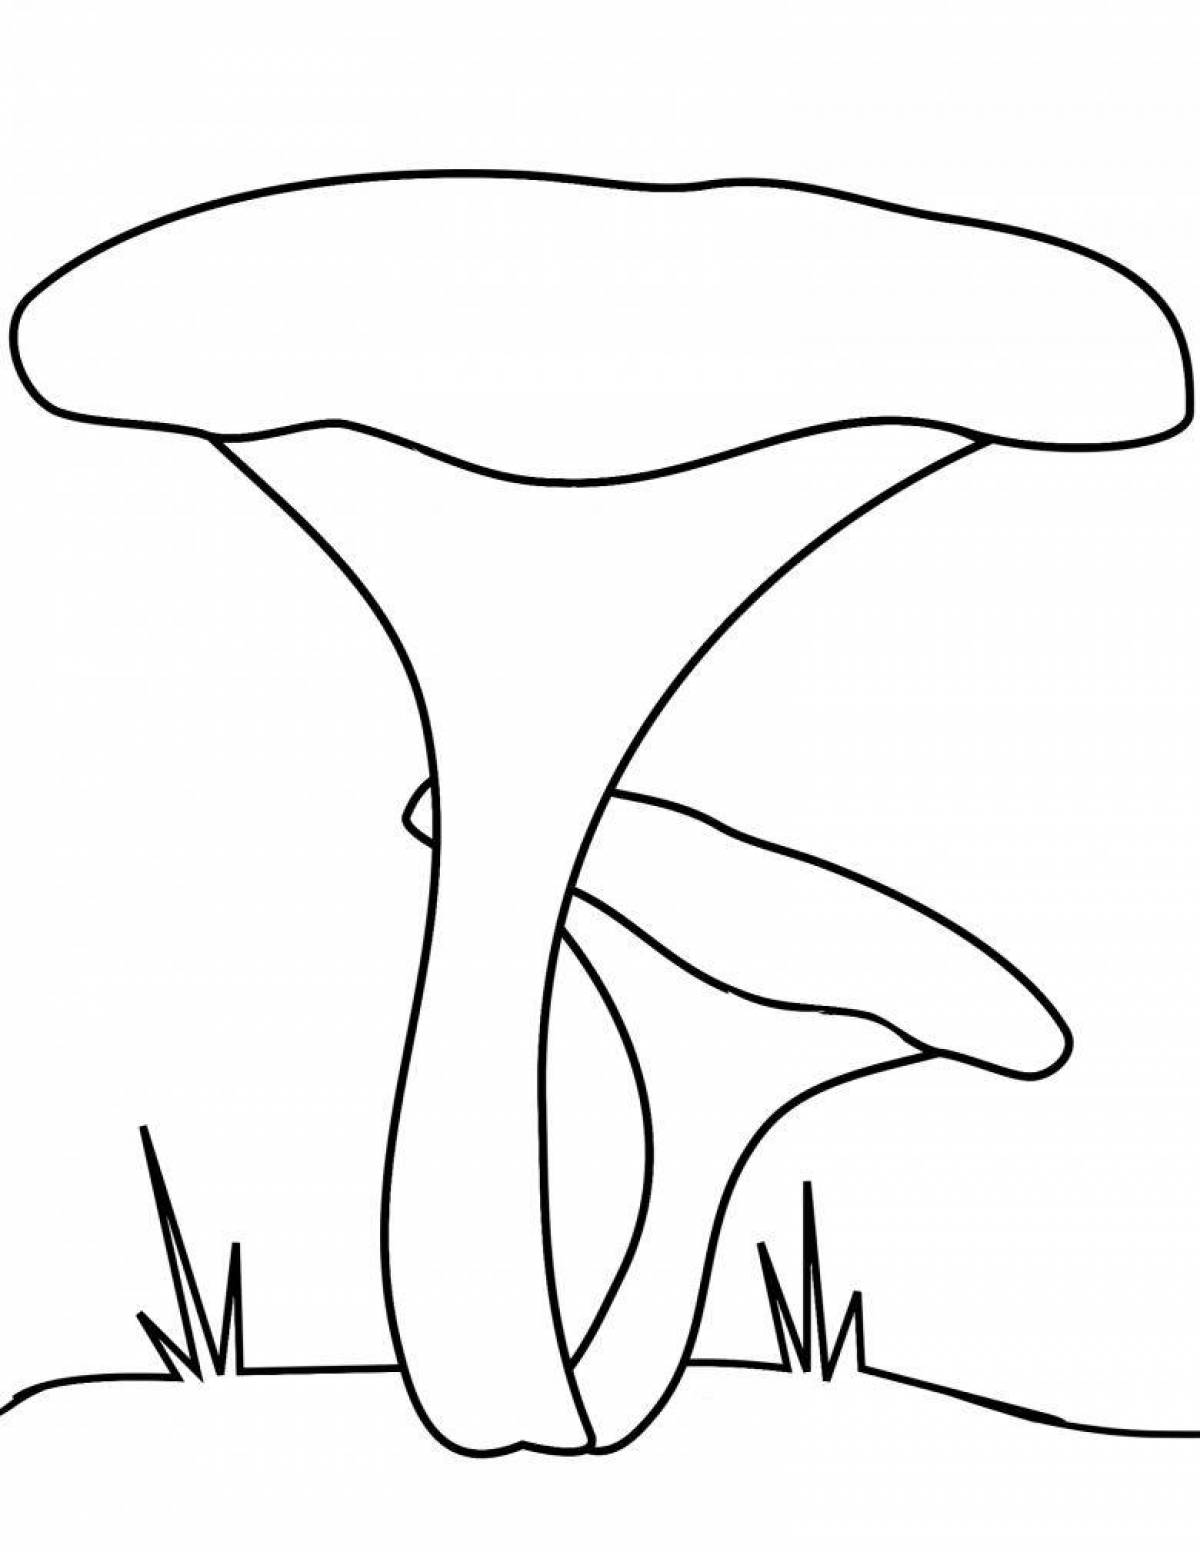 Colouring funny chanterelle mushroom